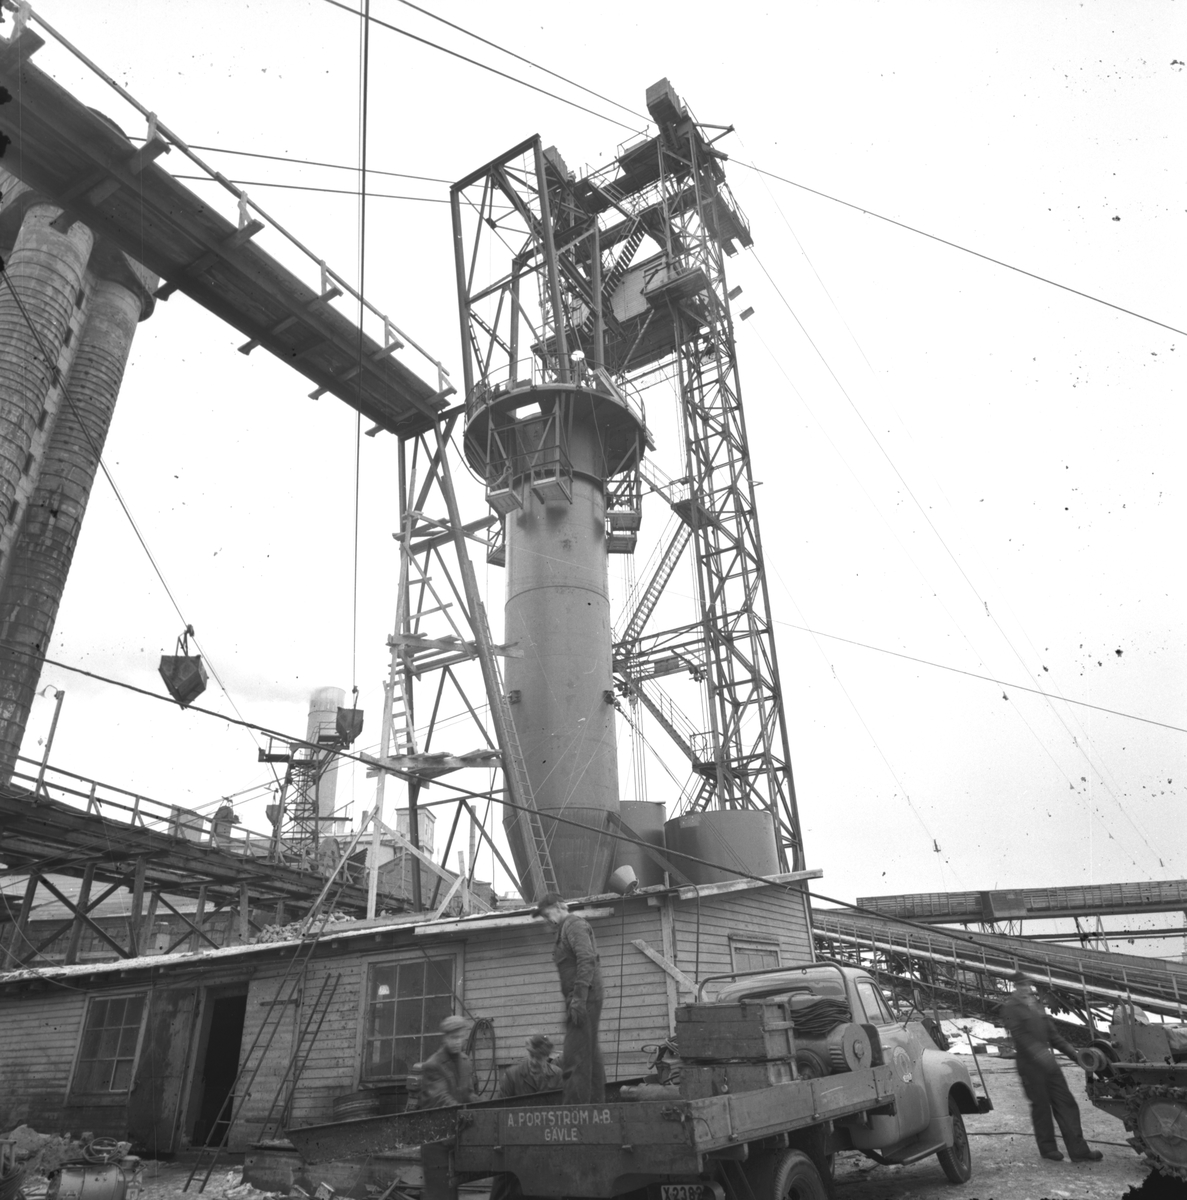 Bygge av transporttorn, Portströms Mekaniska Verkstad. Korsnäs AB. Den 31 januari 1961
